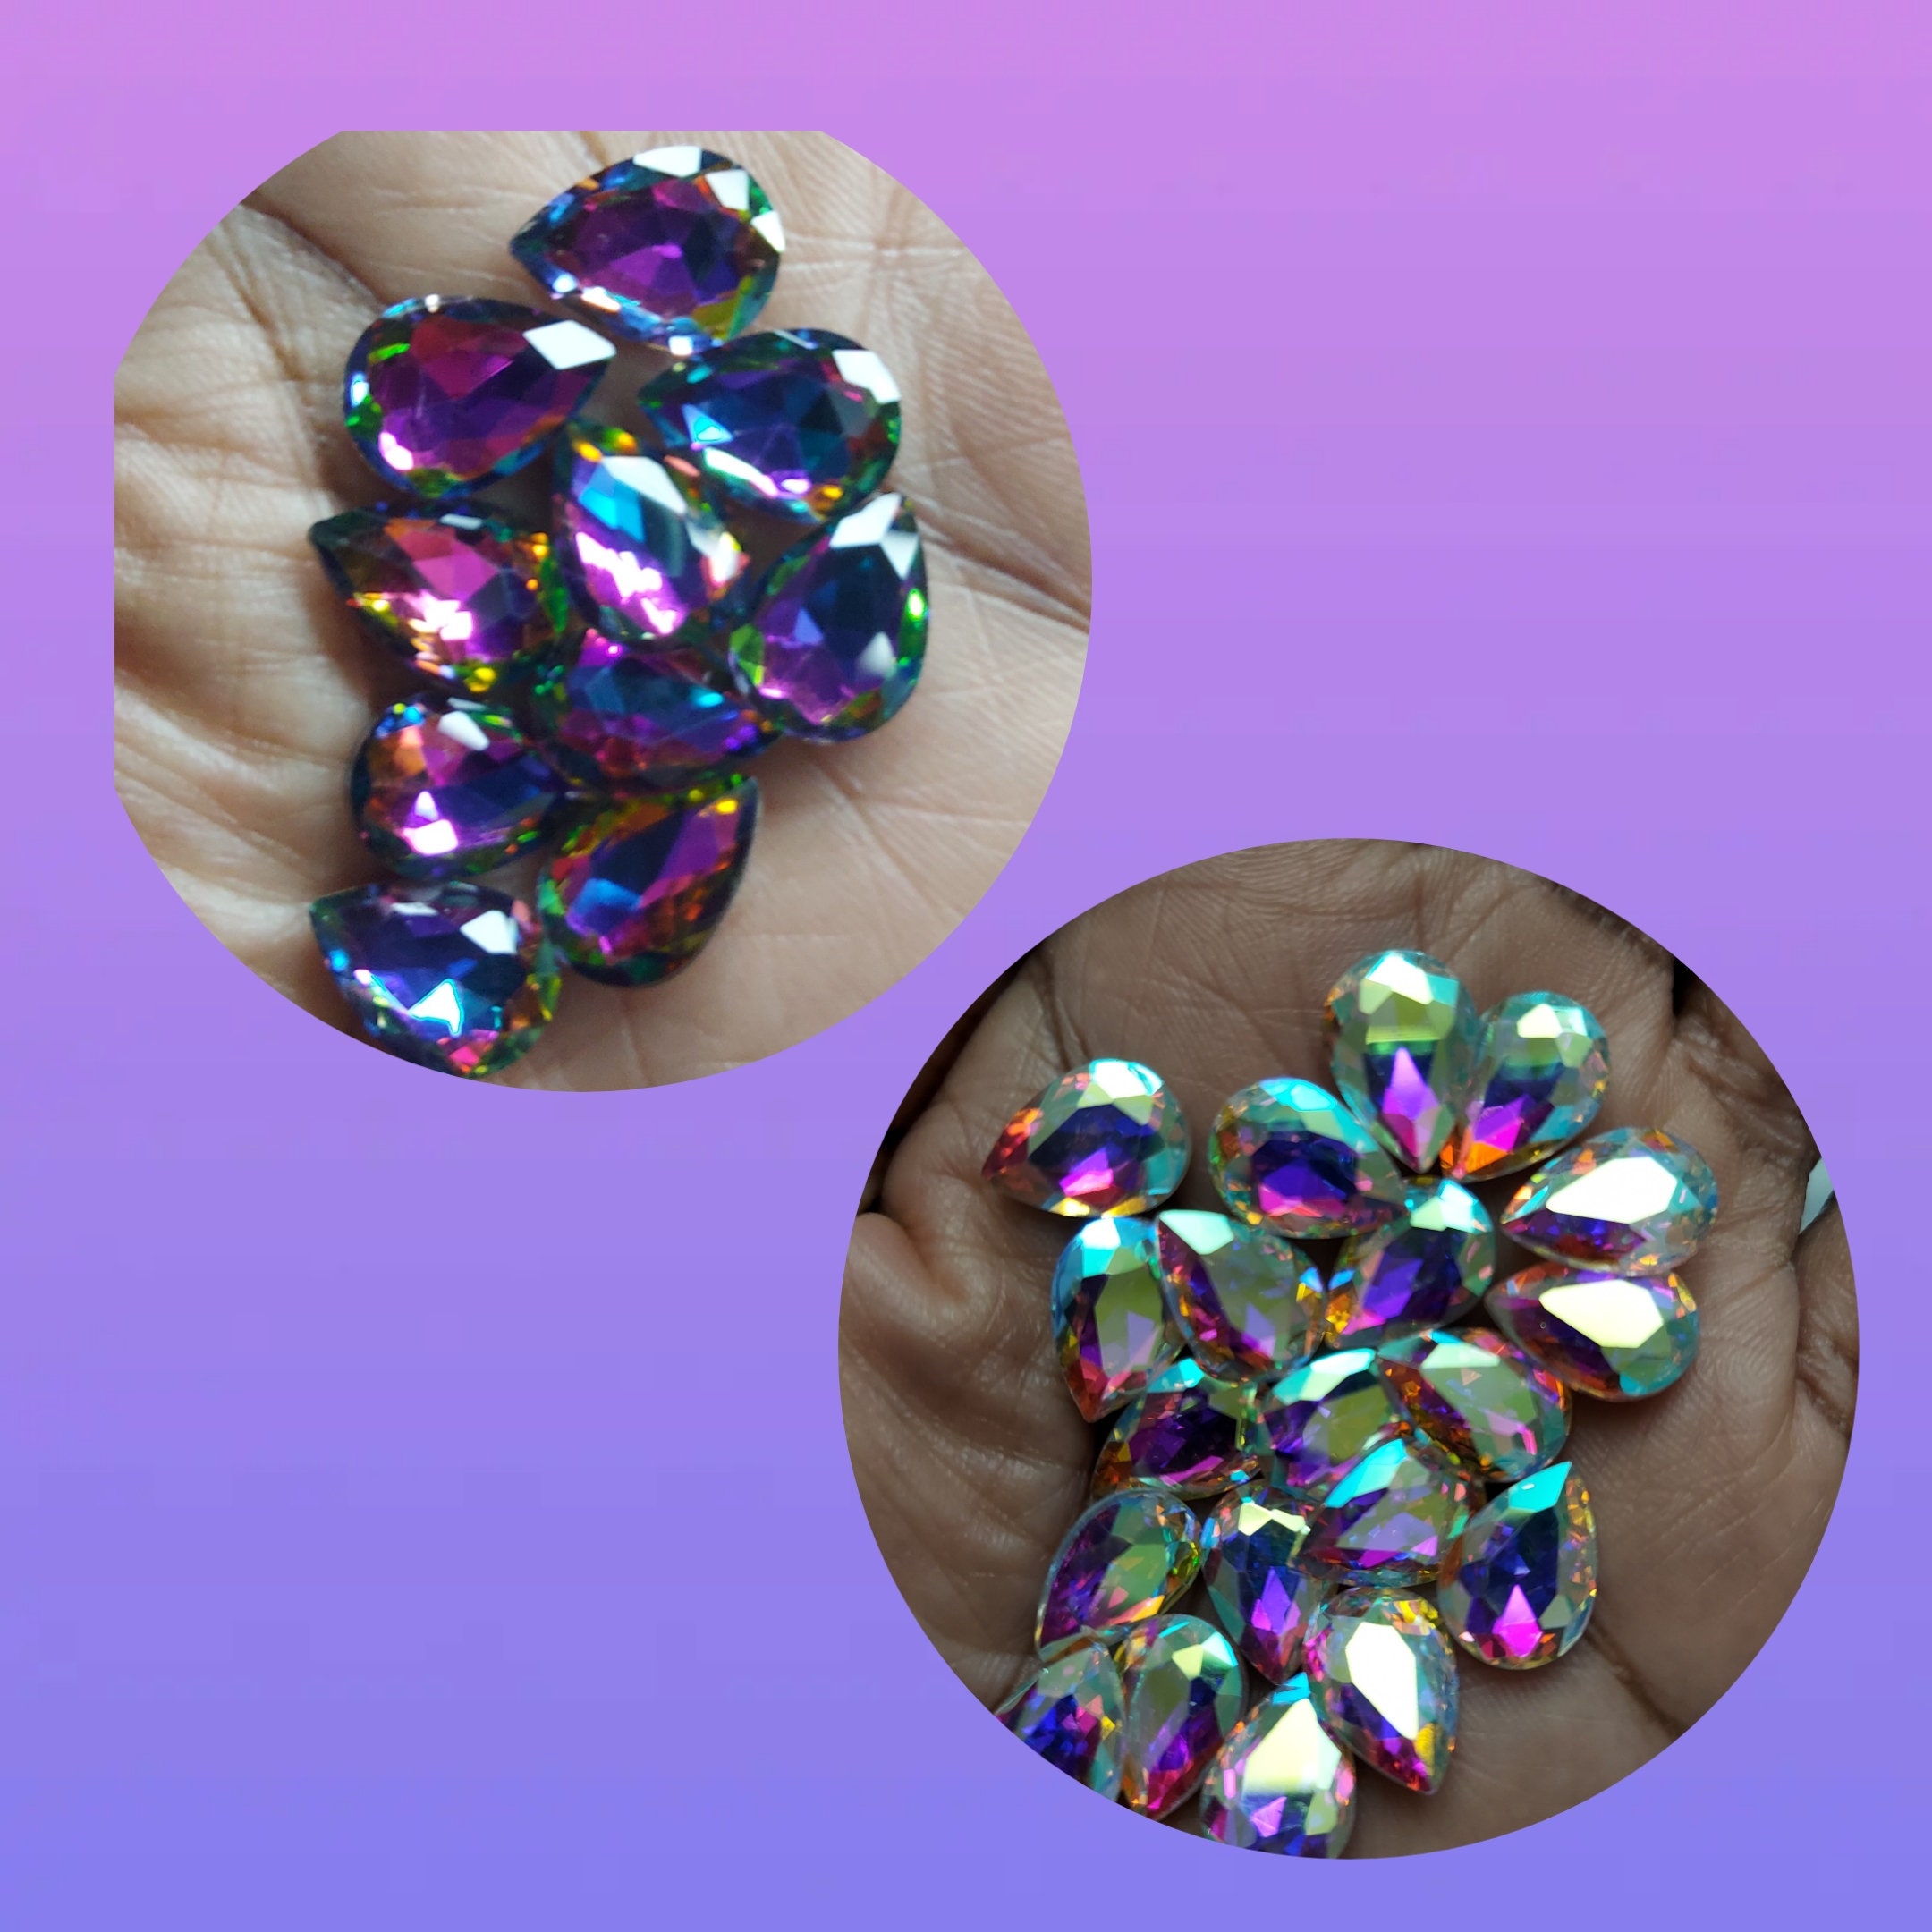 12pcs Assort Pearl Bow Nail Charm Diamond Bow Nail Charm Diamond